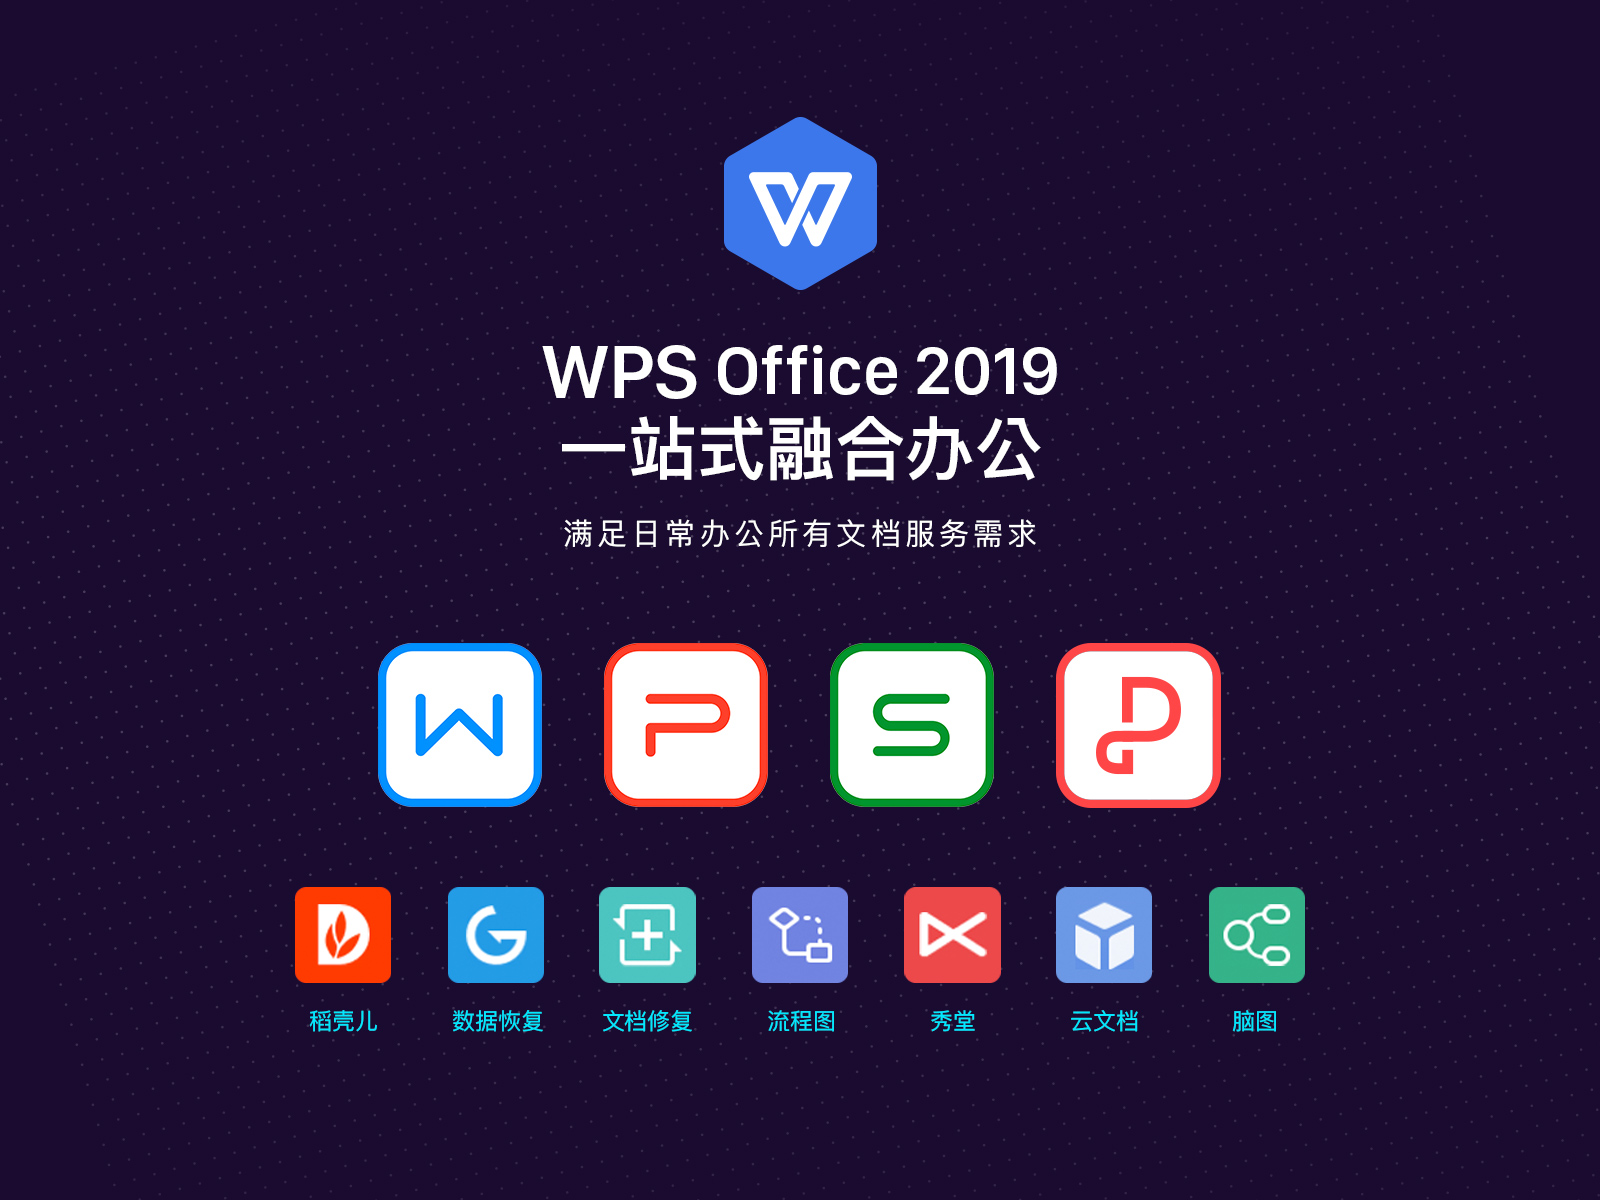 6WPS Office 2019.jpg